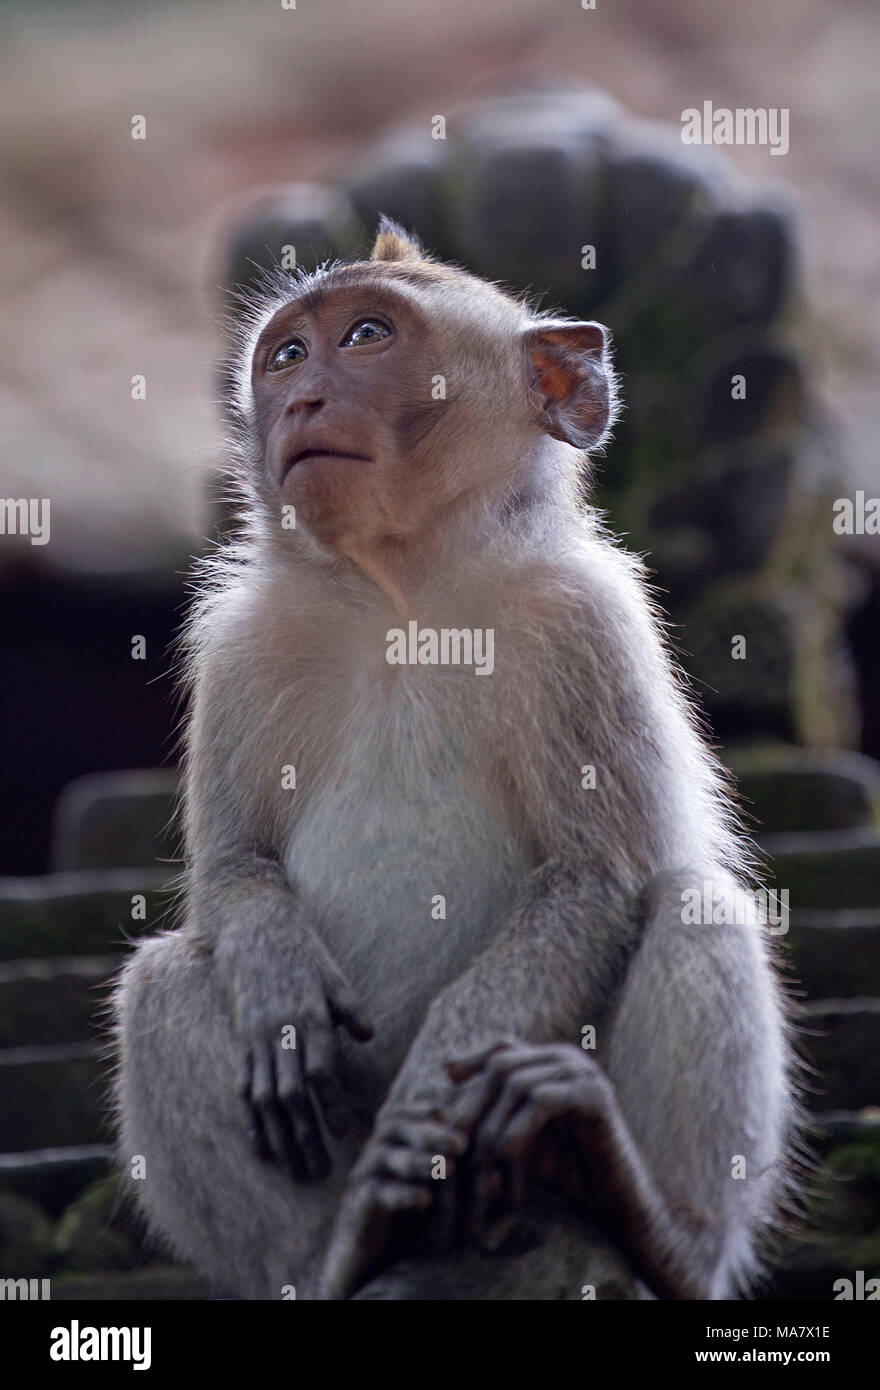 Macaque monkey taken in Ubud monkey forest, Indonesia Stock Photo